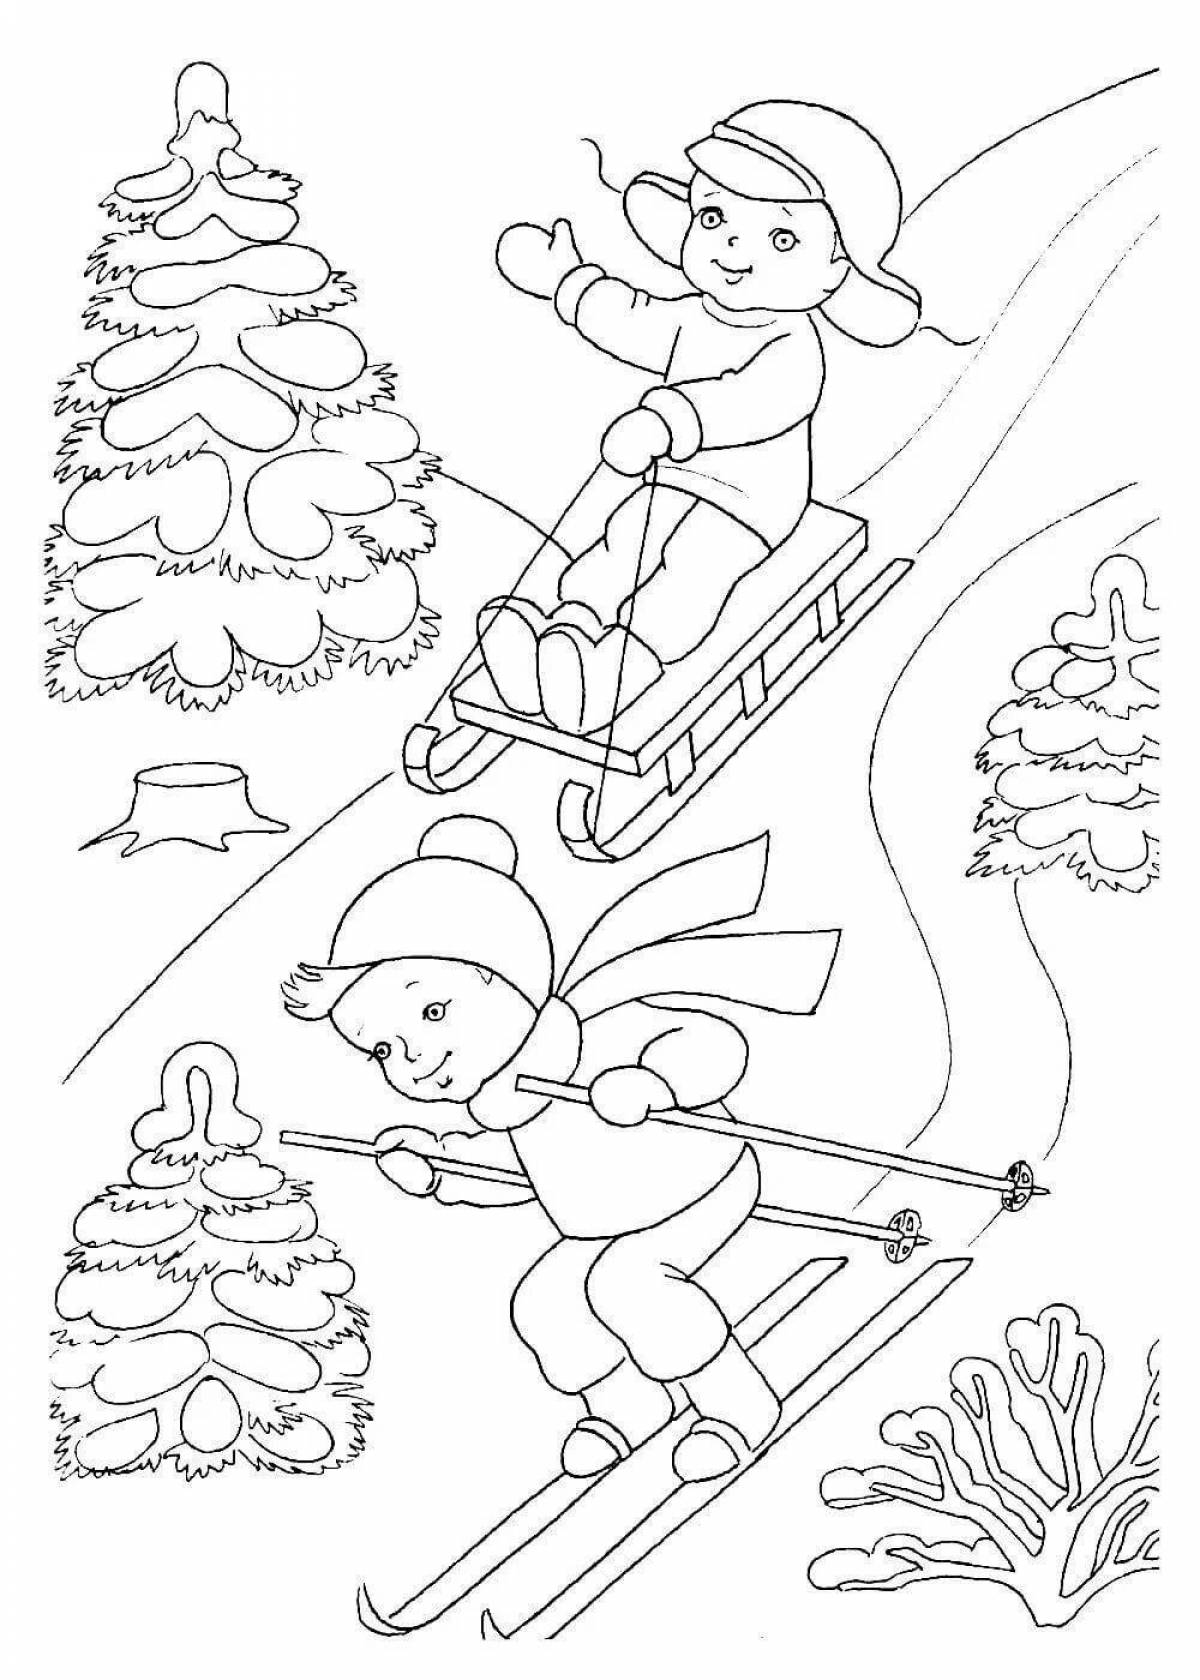 Shiny winter fun coloring book